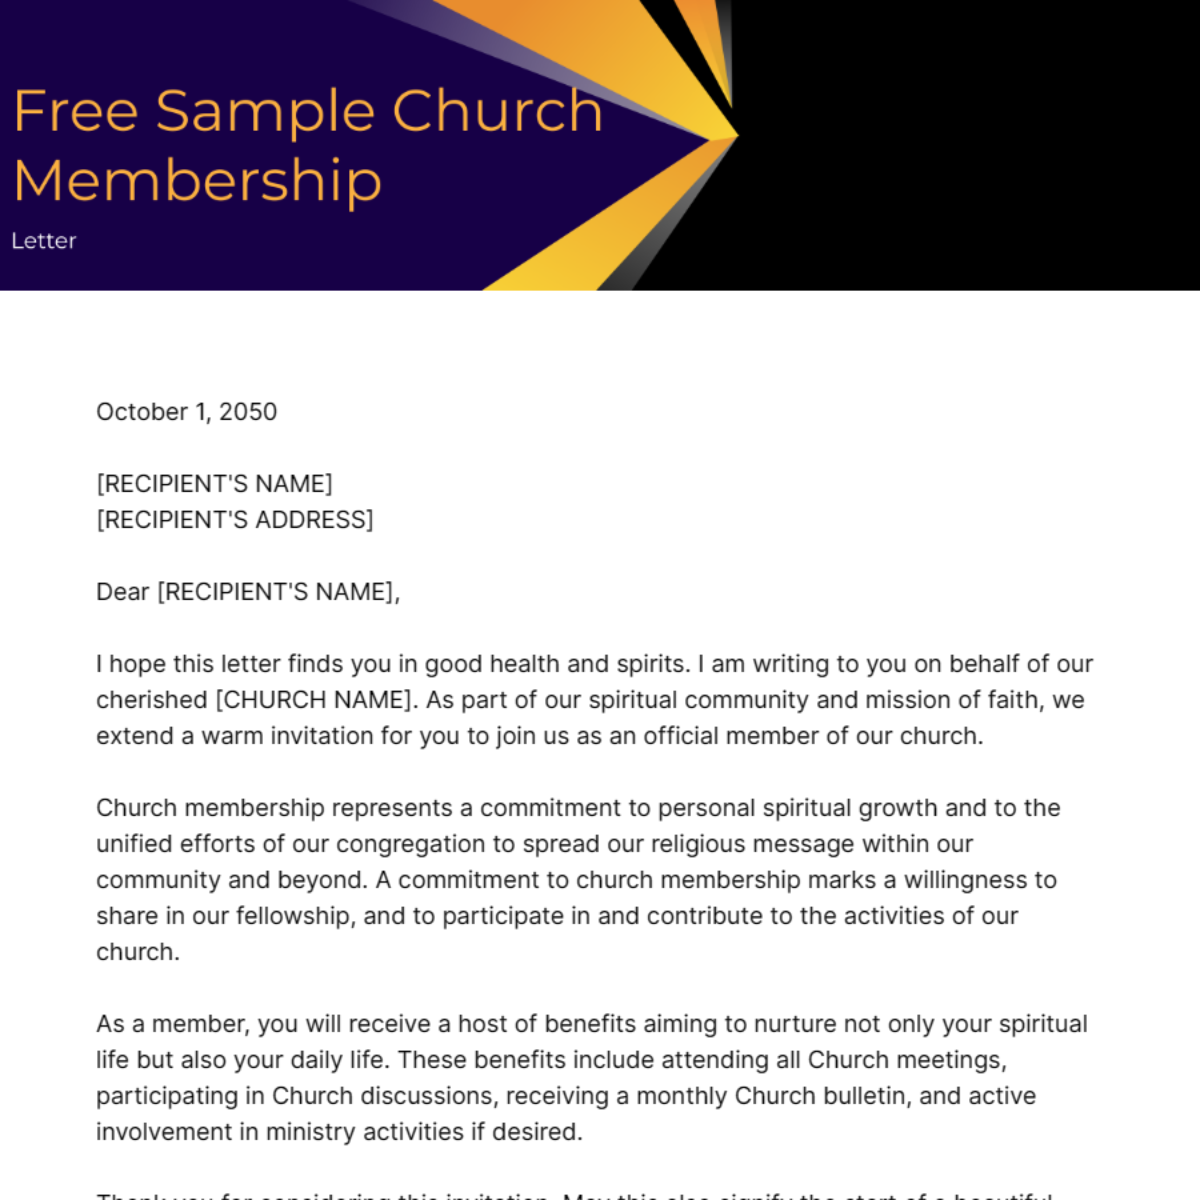 Sample Church Membership Letter Template